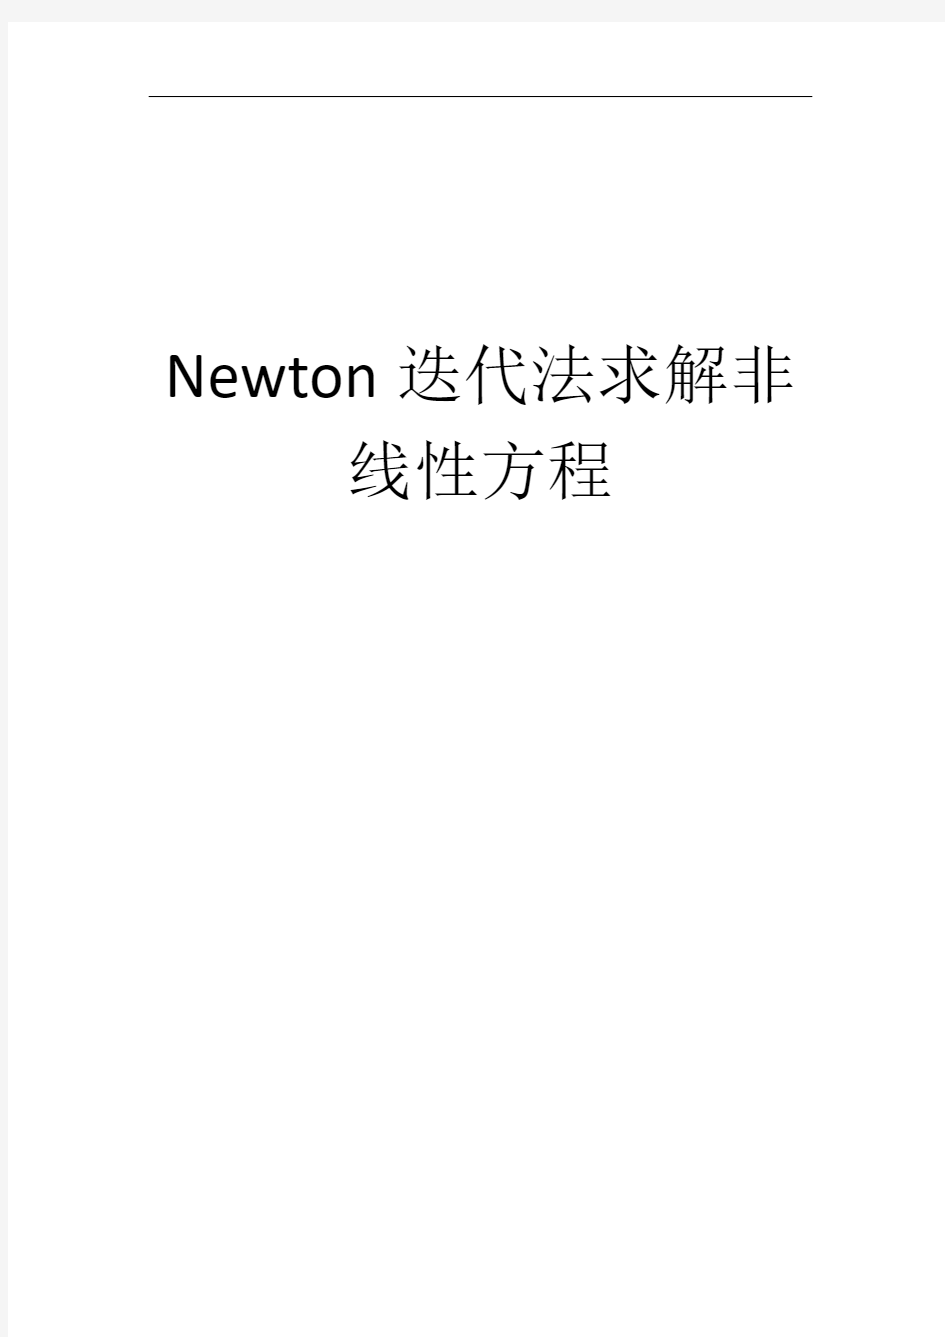 Newton迭代法求解非线性方程